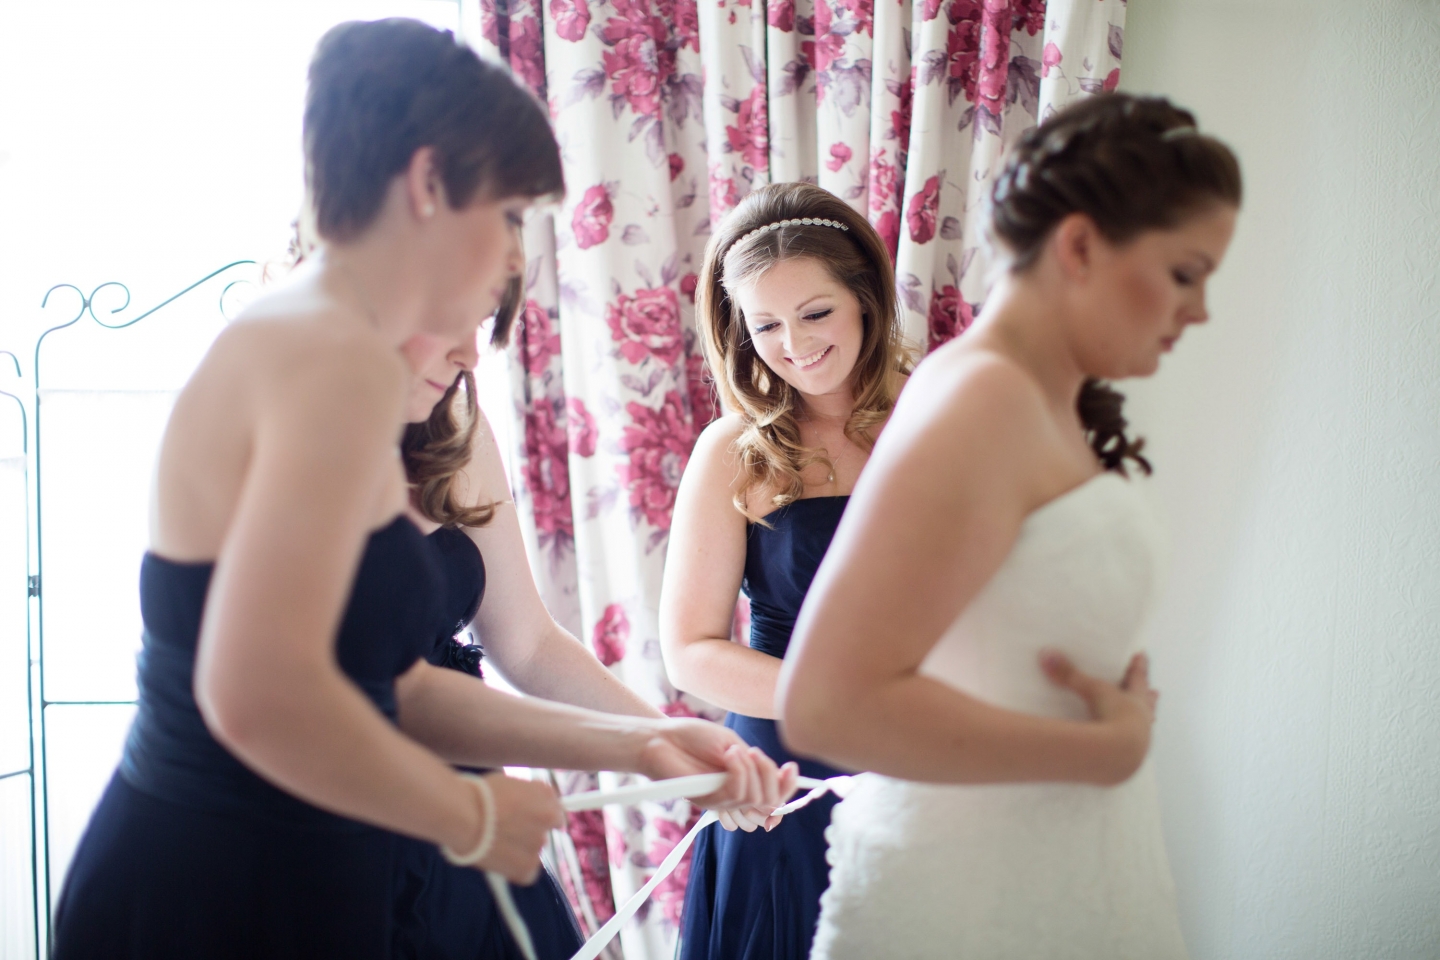 Bridal preparation photograph taken at a wedding in Aberdeen by Jonathan Addie, an Aberdeen based wedding photographer